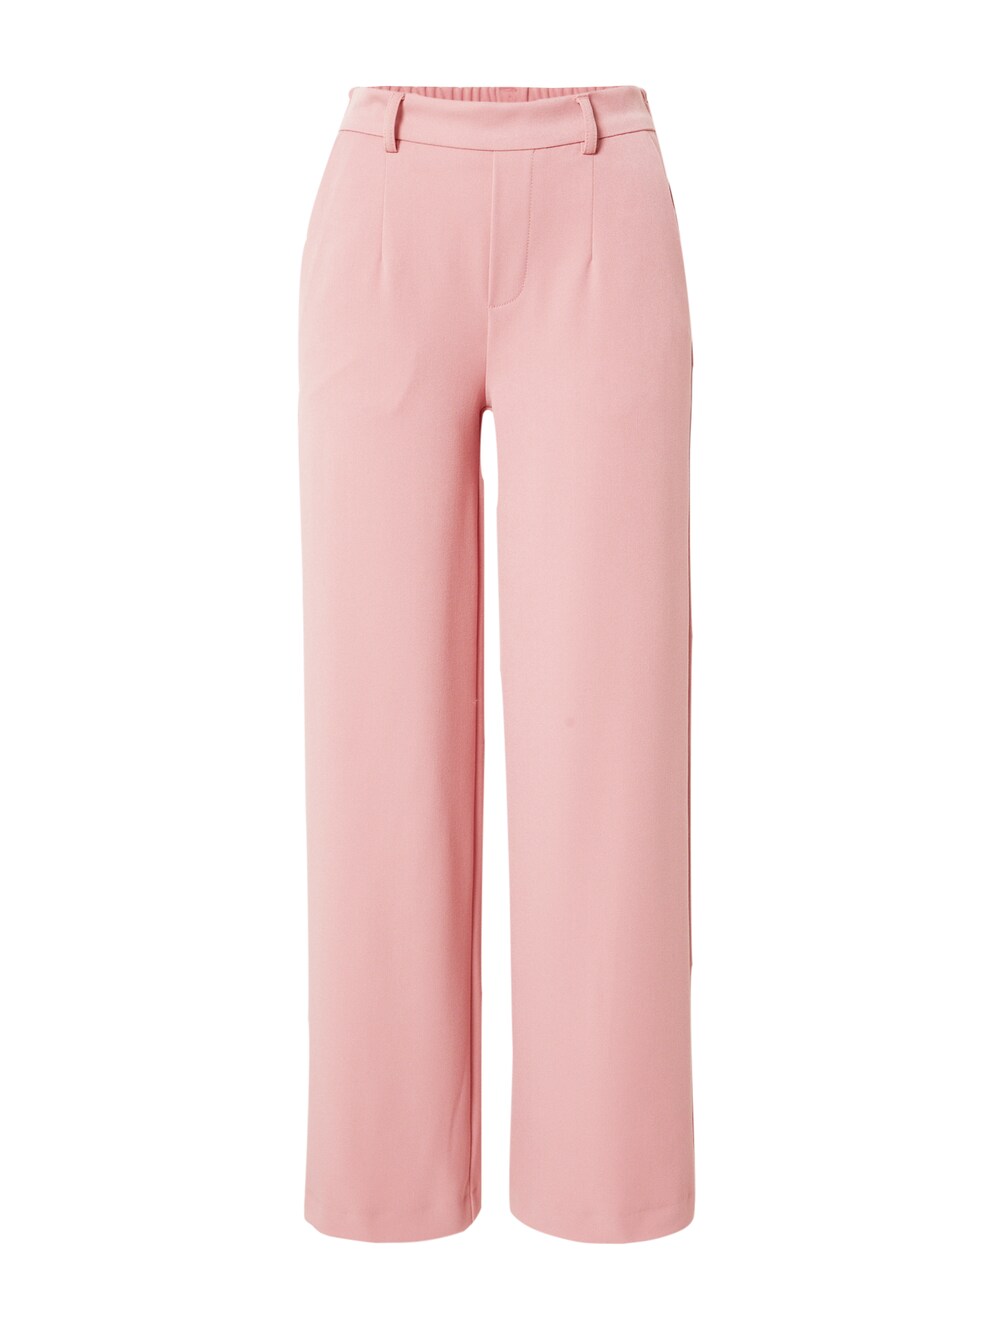 Широкие брюки со складками спереди Object Lisa, розовый